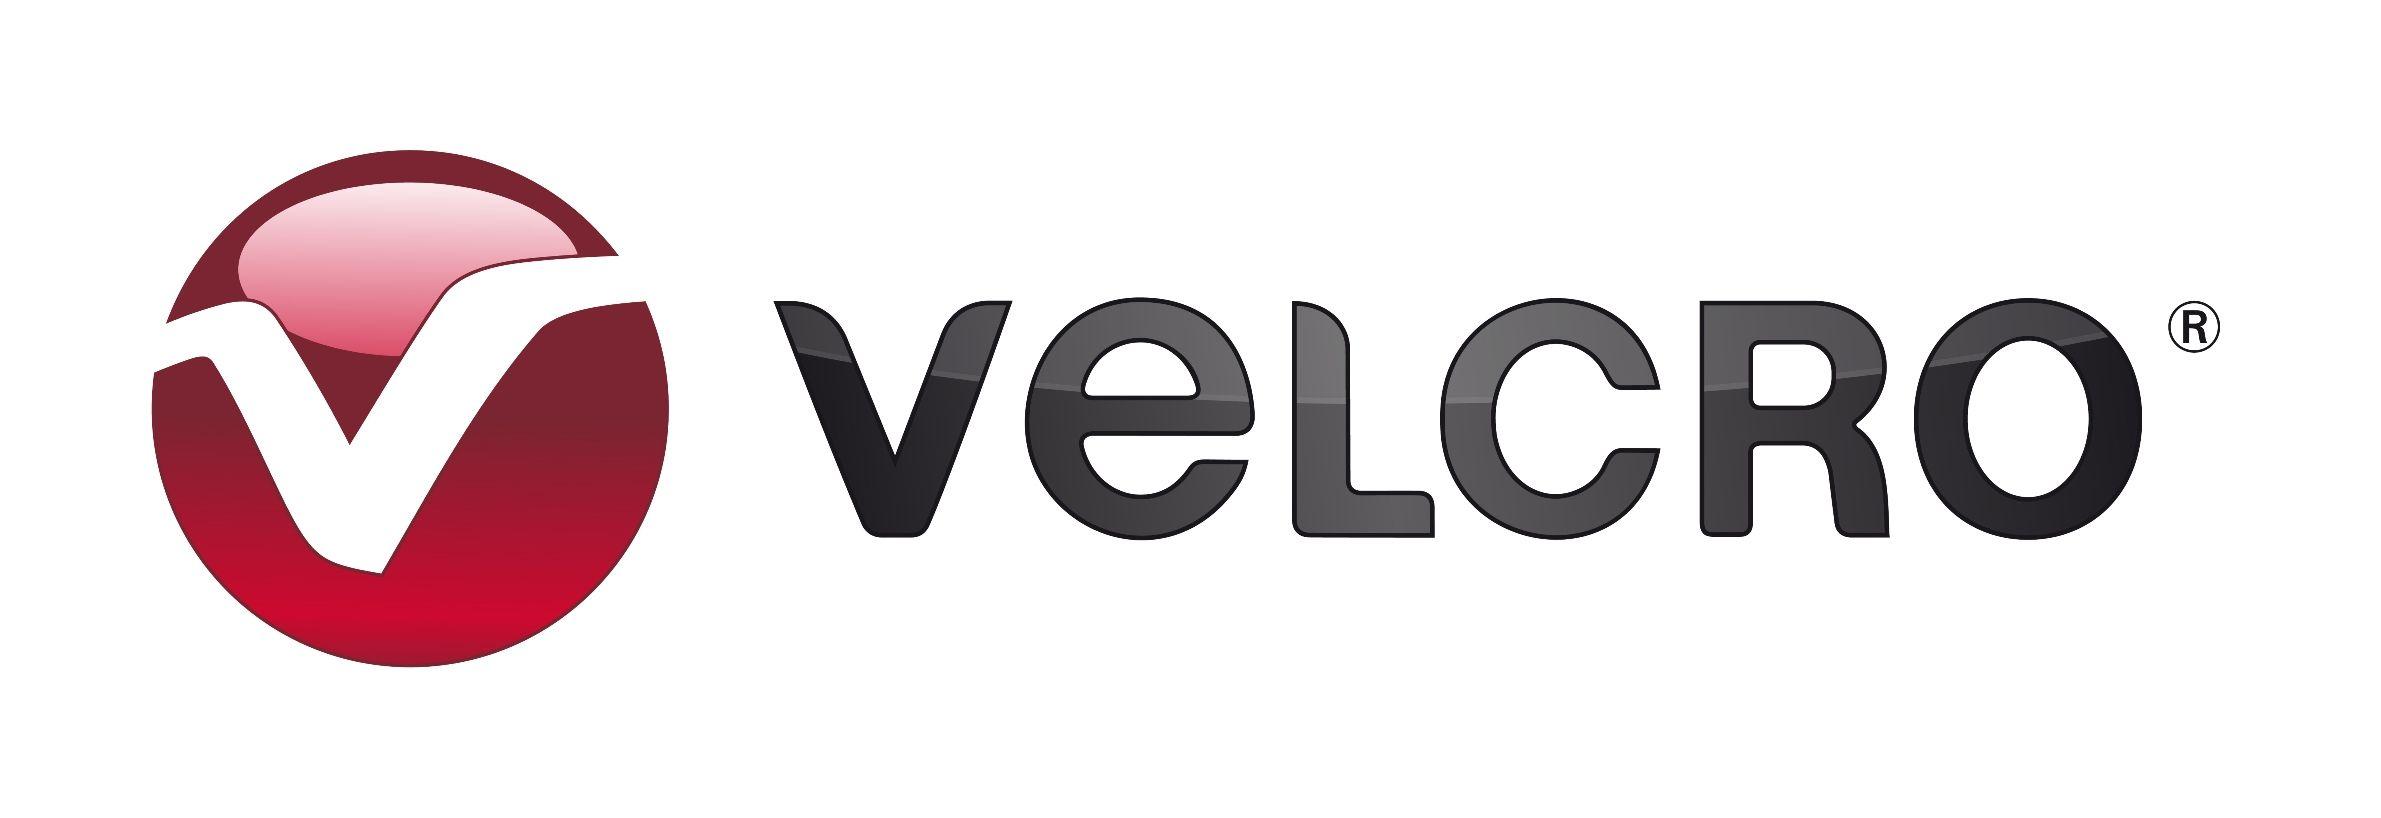 Velcro Logo - Velcro Logo - large - Partners in Project Green : Partners in ...